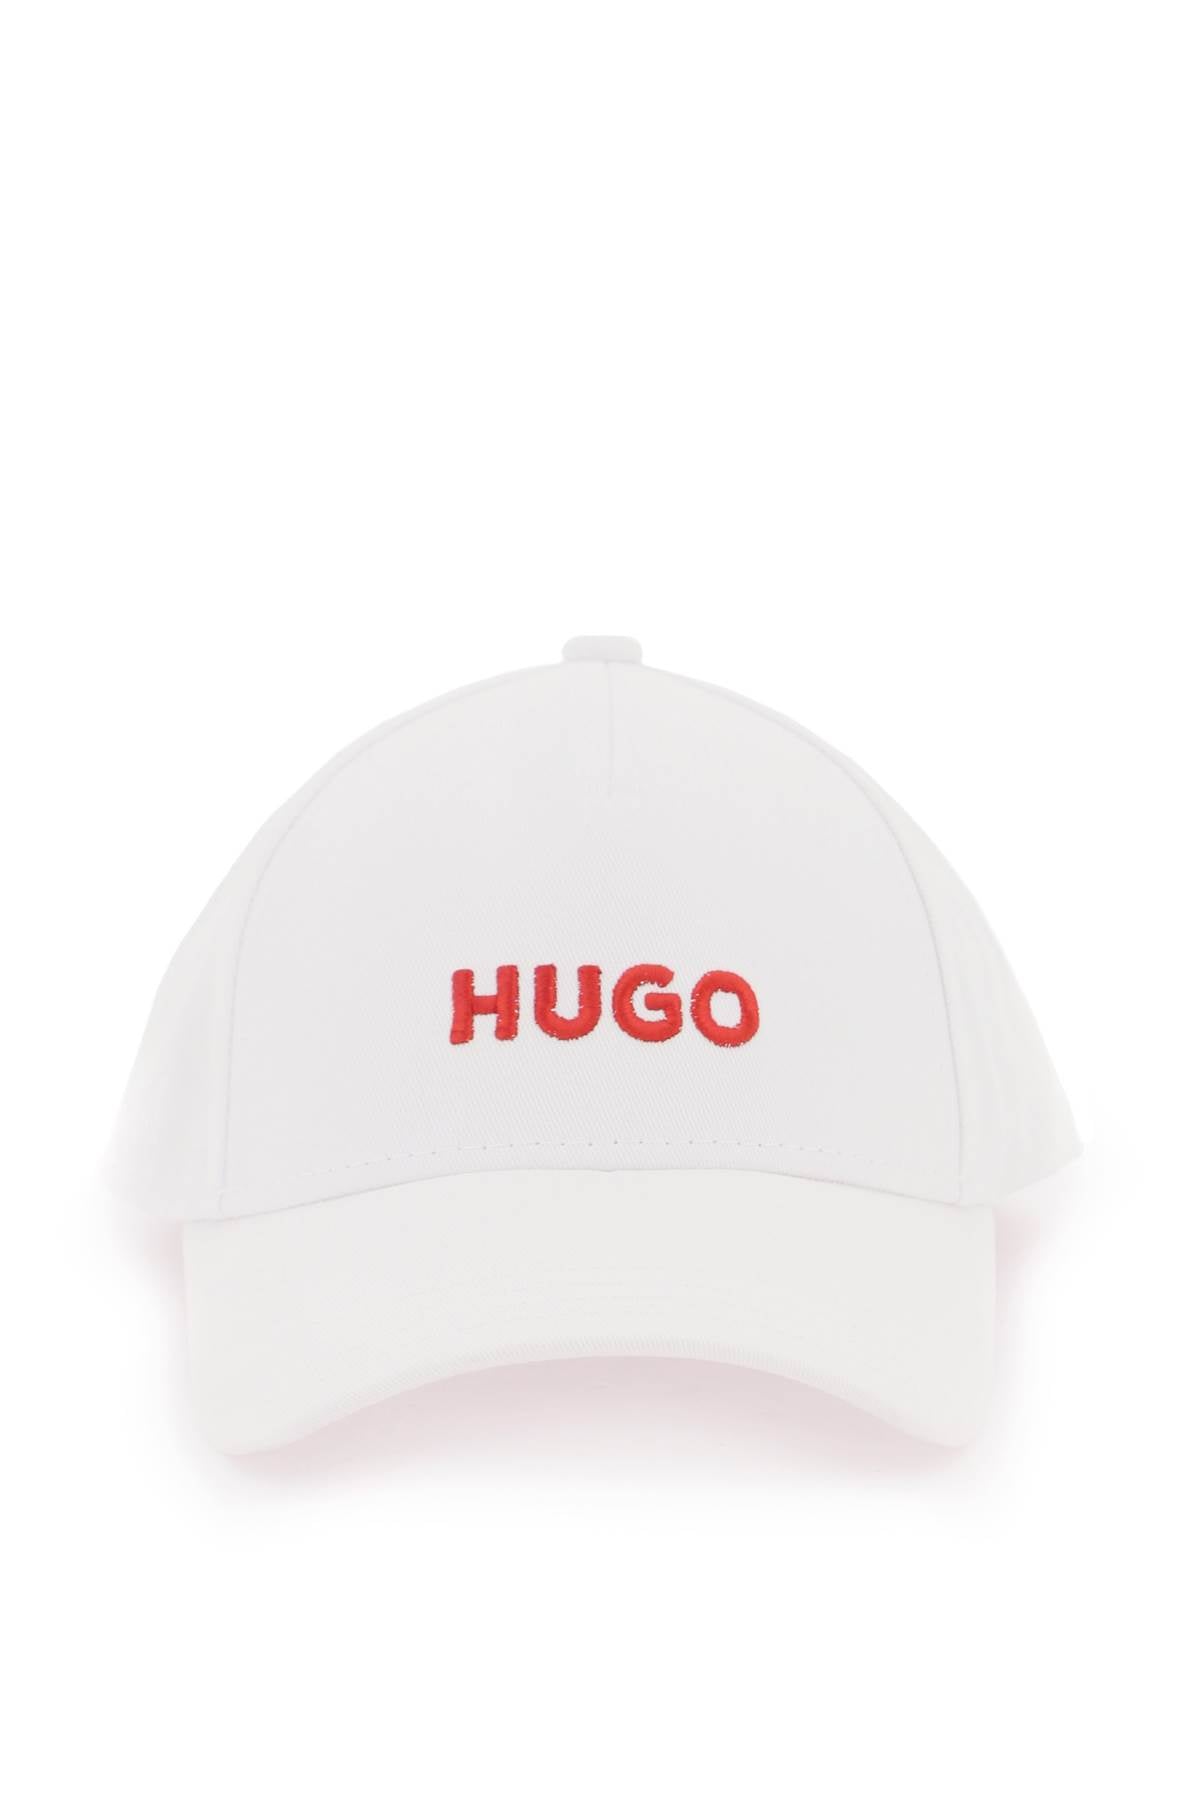 Hugo baseball cap with – embroidered logo Station Italy